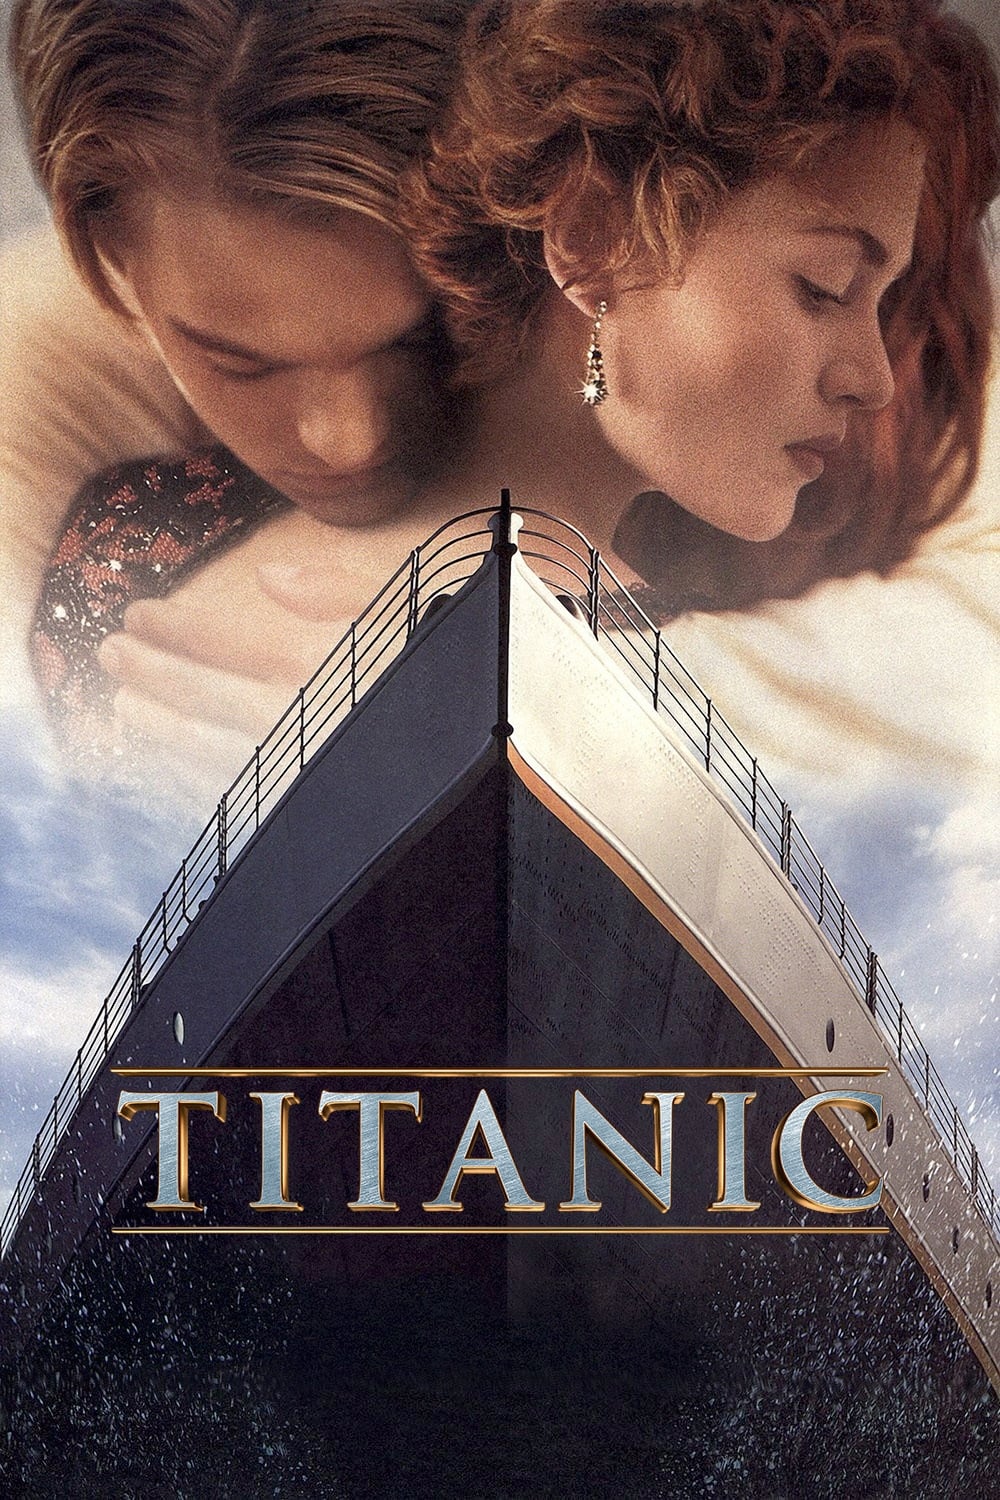 ver Titanic pelicula completa en español latino